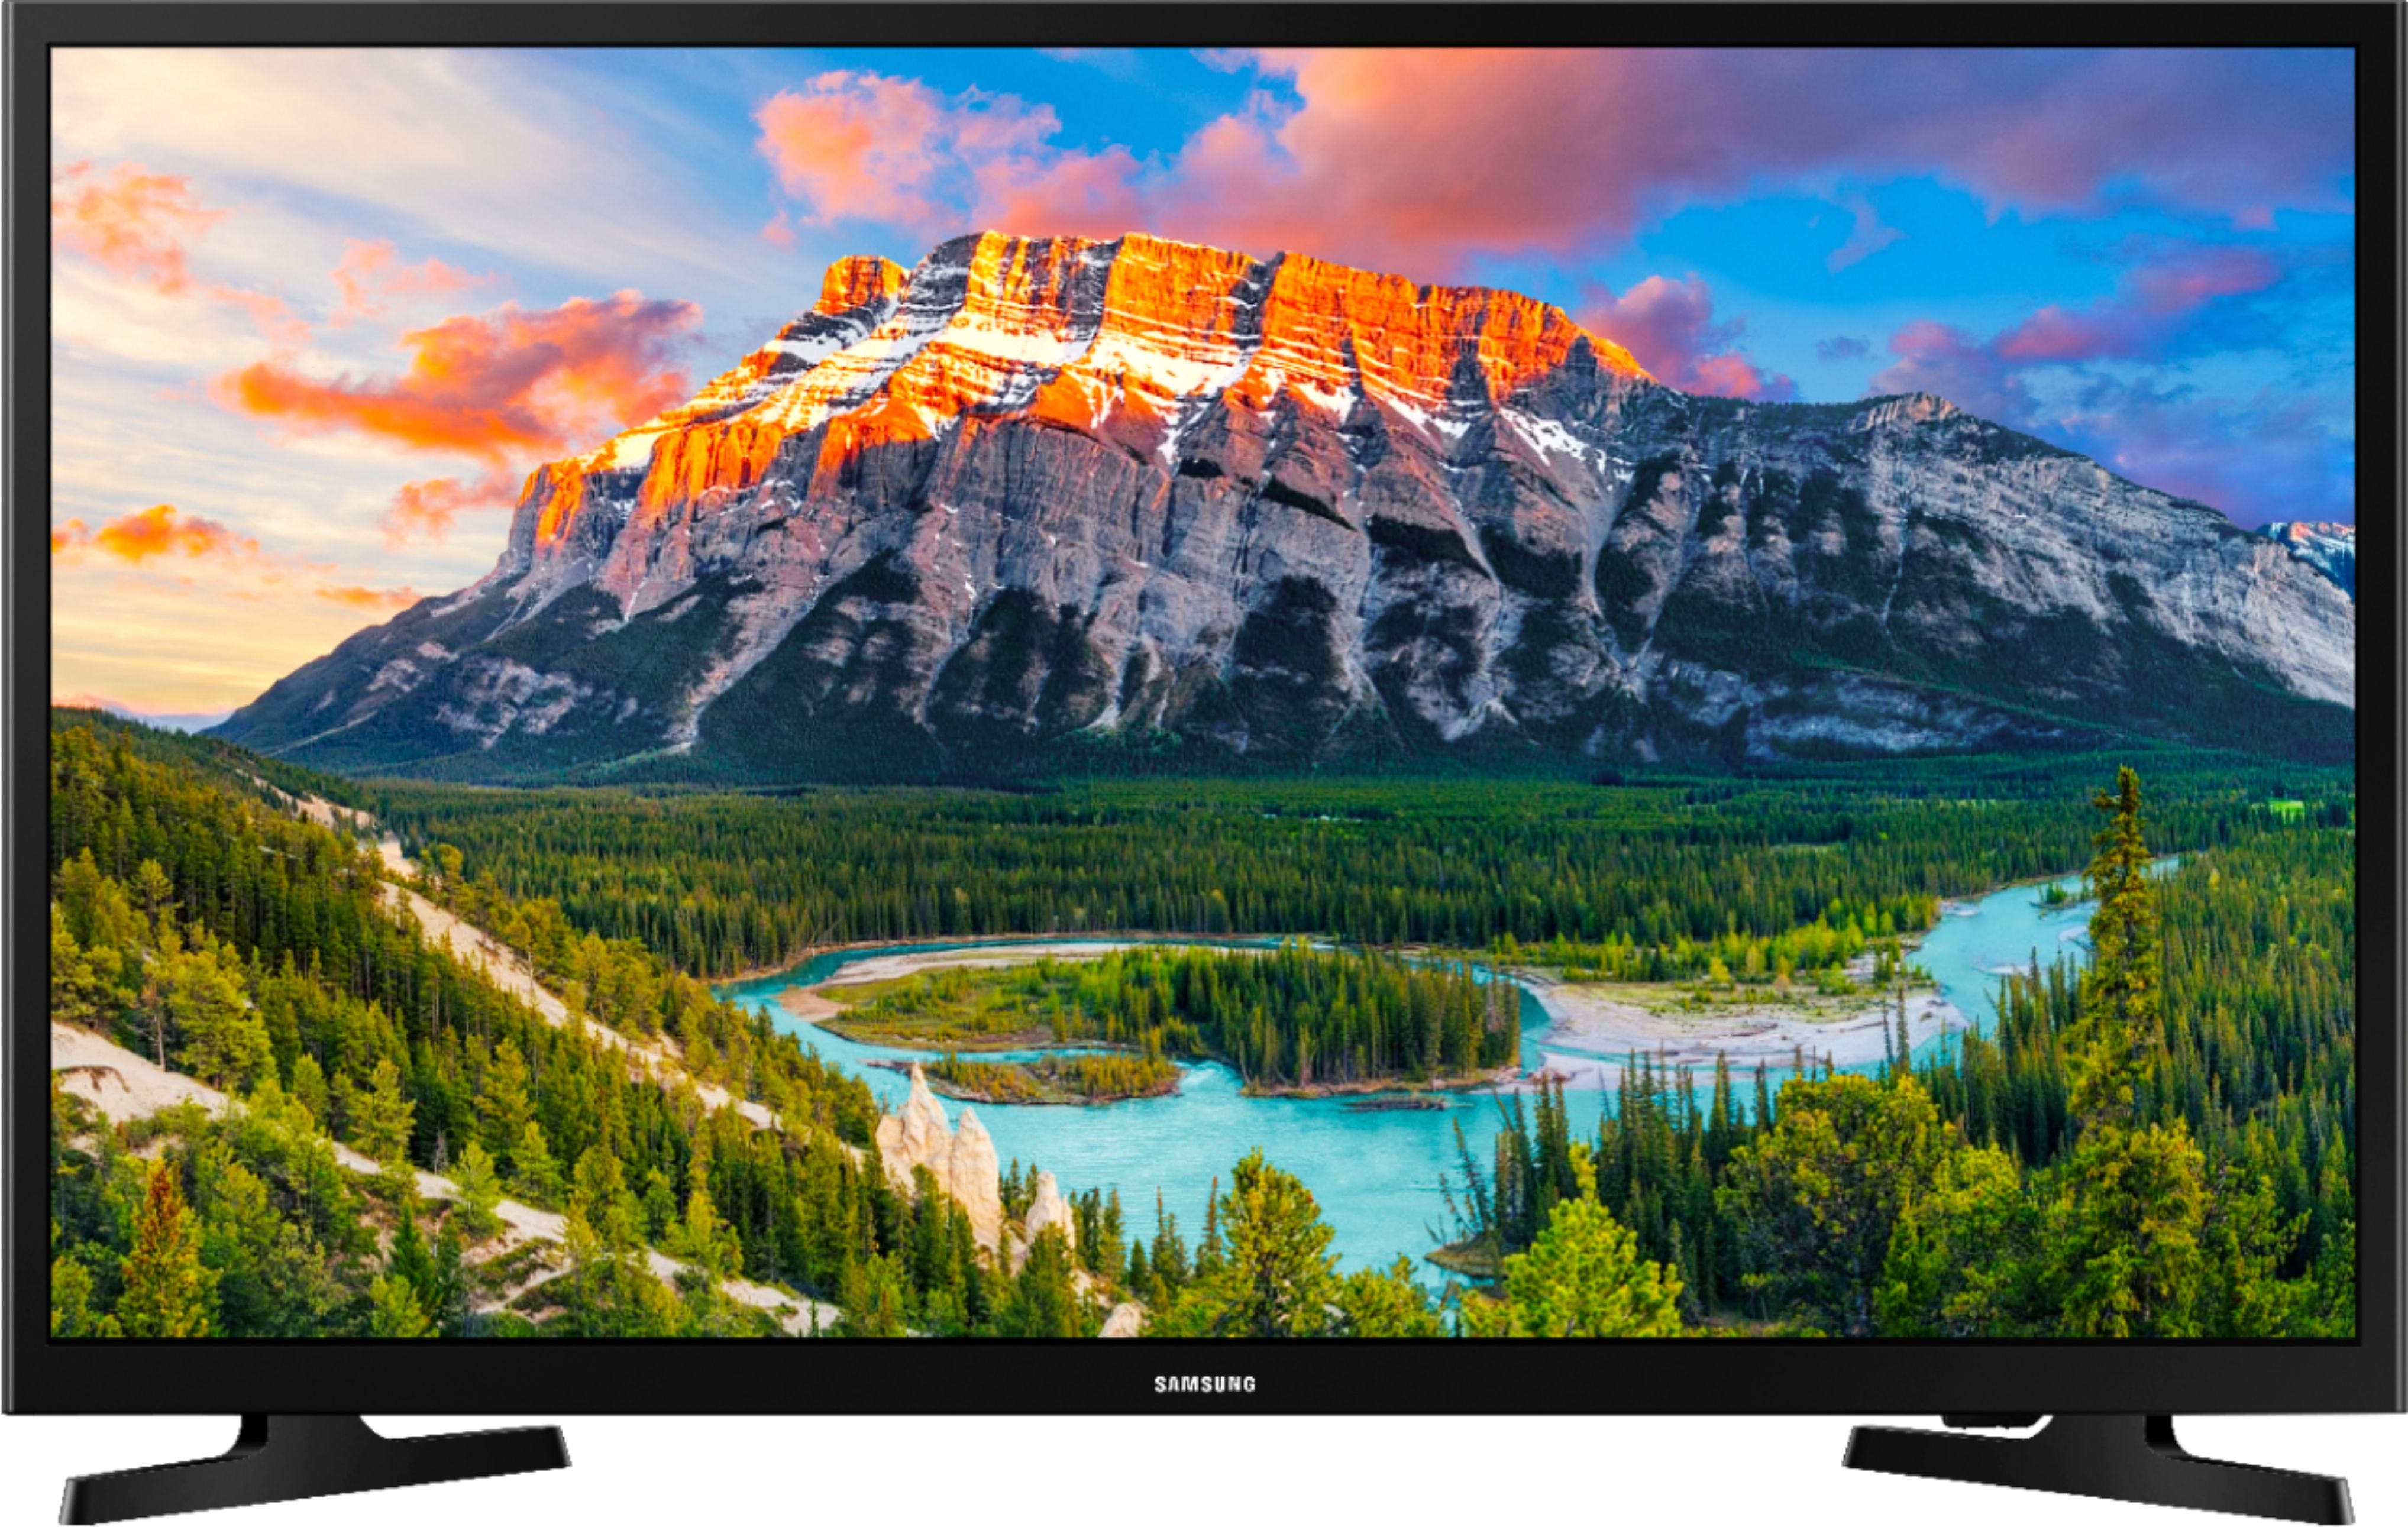 Samsung 43 Class 5 Series LED Full HD Smart Tizen TV  - Best Buy